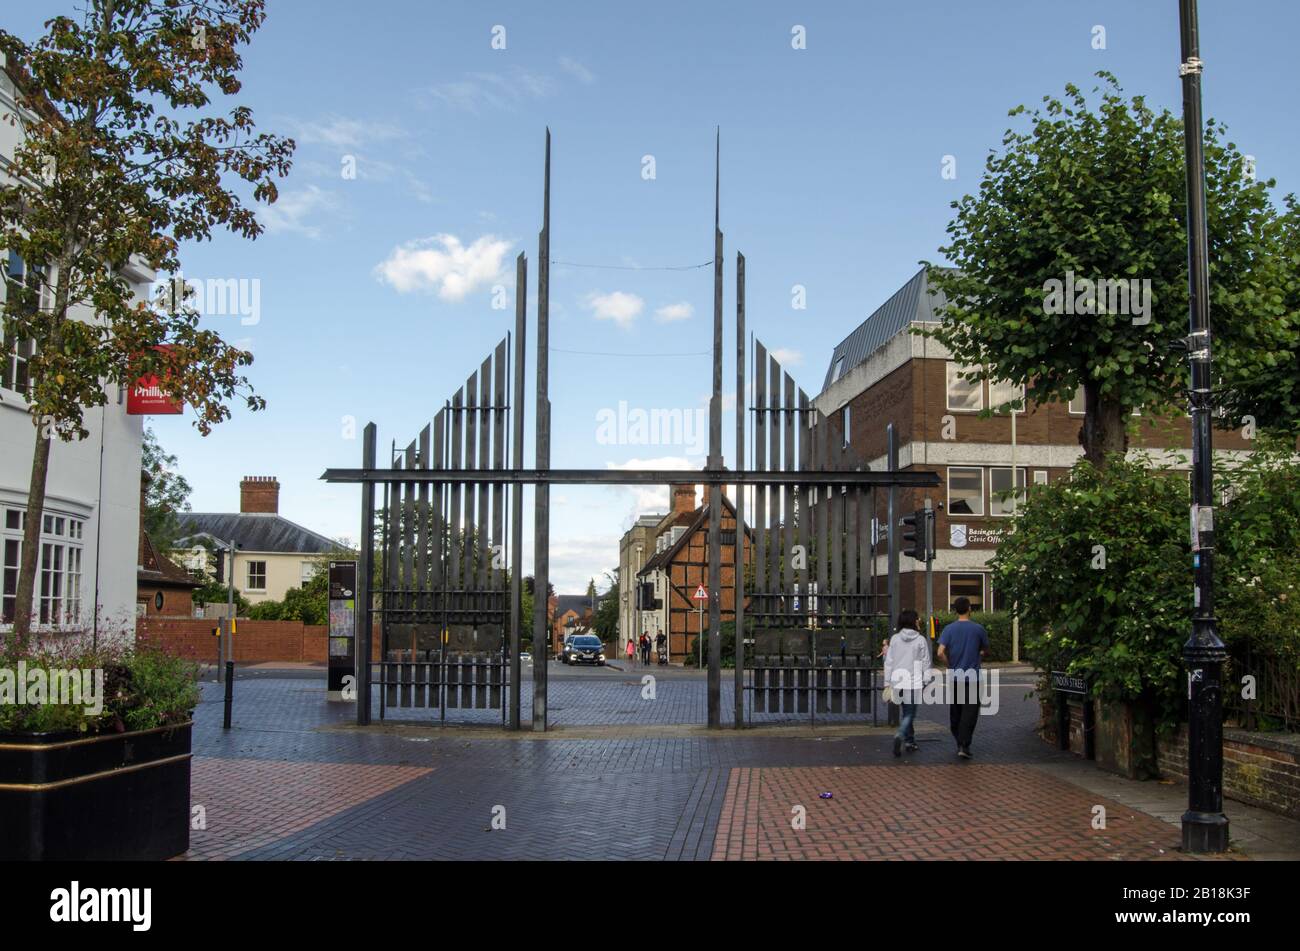 Basingstoke, Großbritannien - 1. September 2019: Triumphales Tor am Start der London Street im Stadtzentrum von Basingstoke. Stockfoto